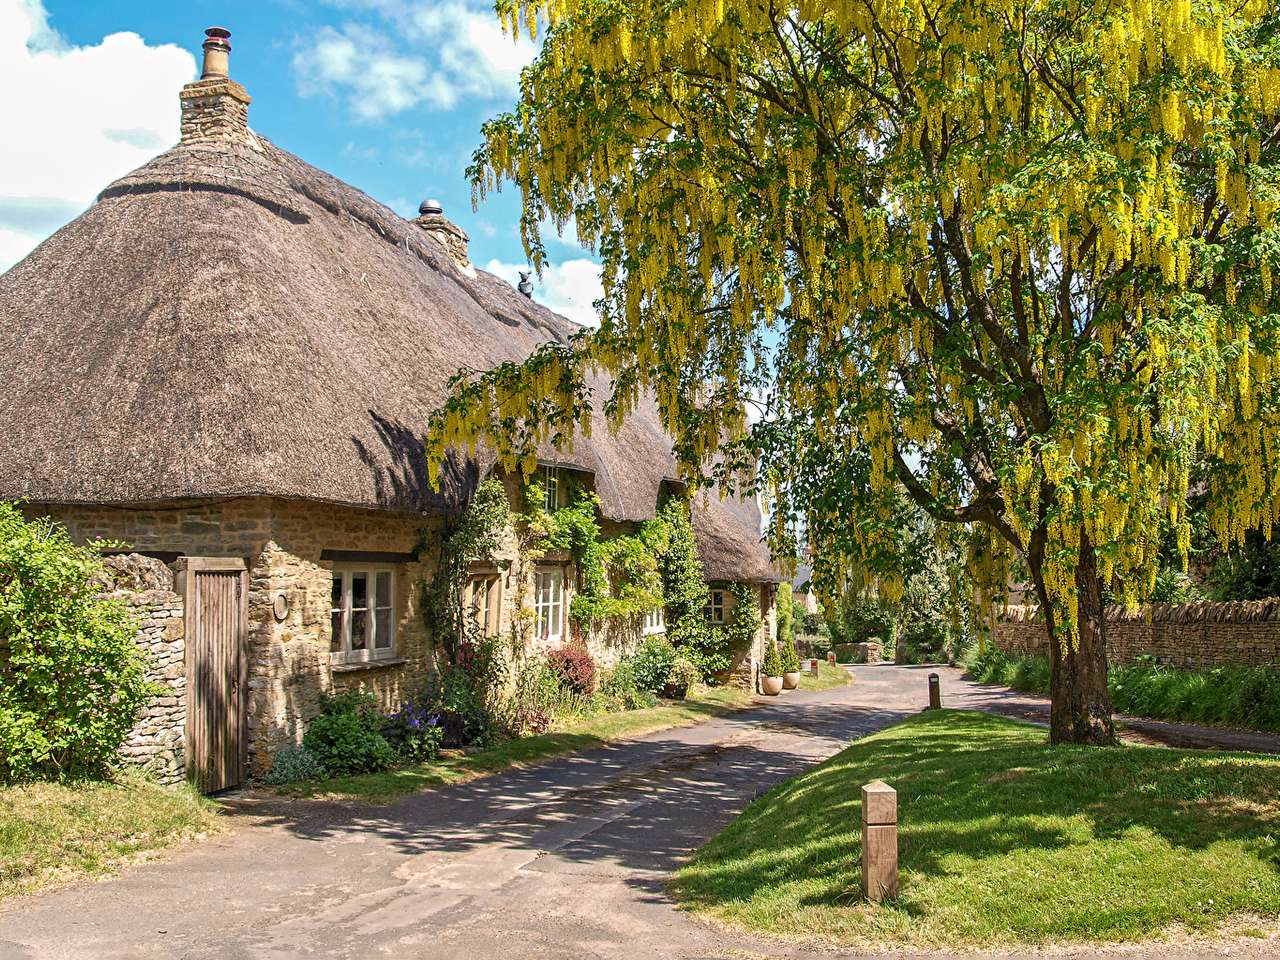 Un cottage inglese di campagna vicino a una strada di campagna puzzle online